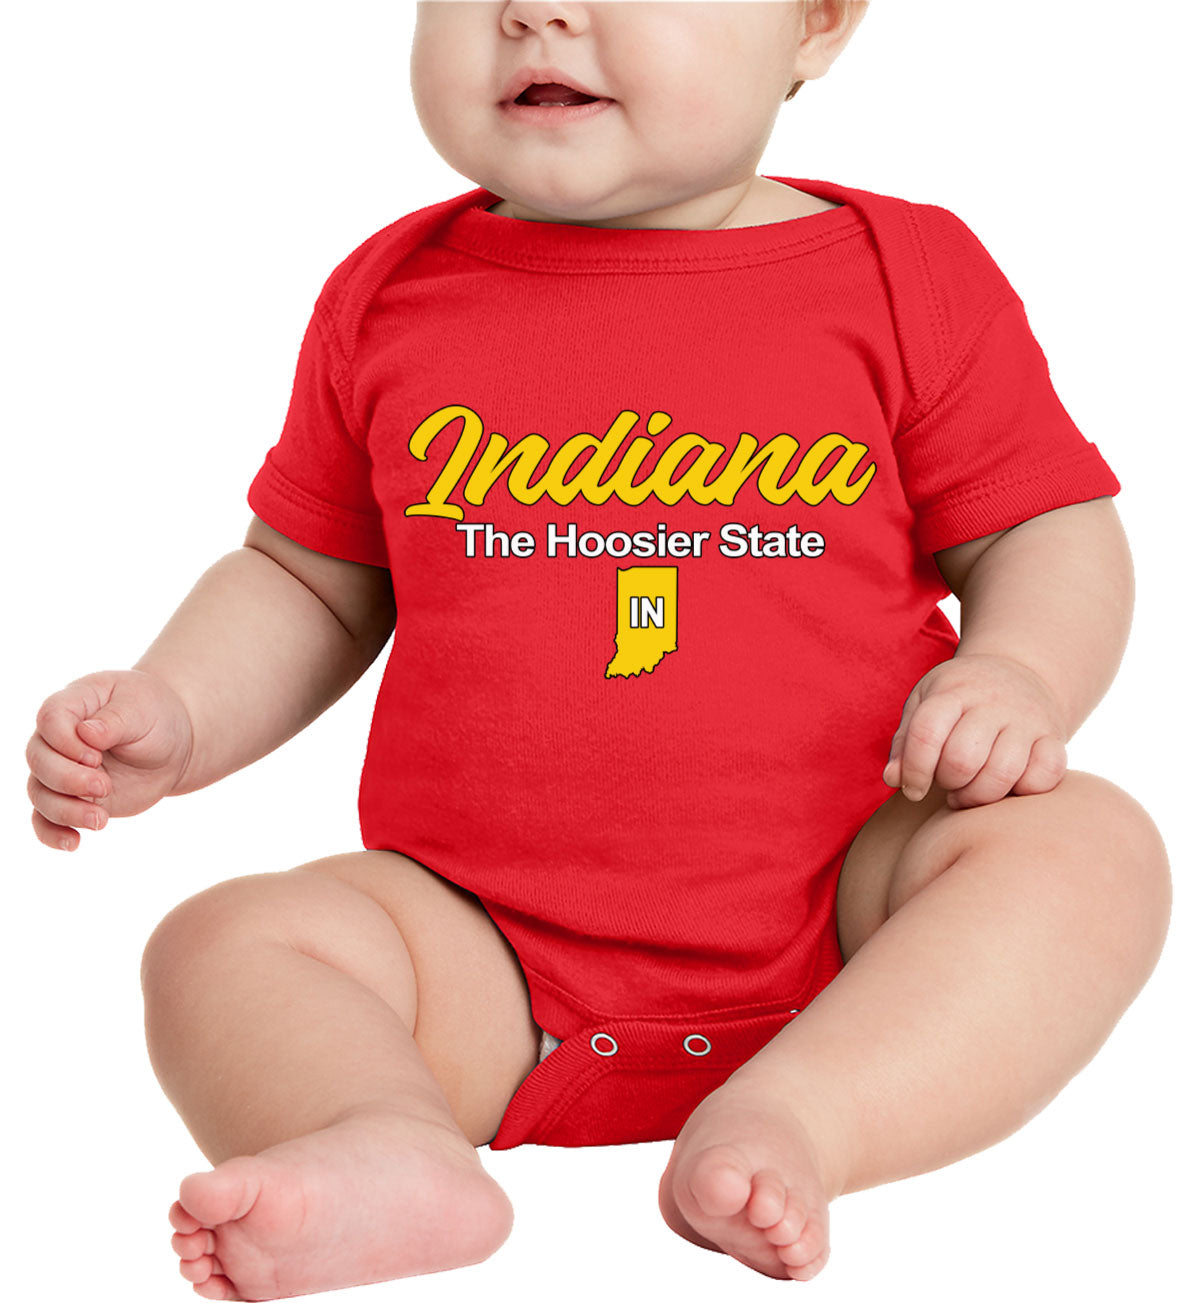 Indiana The Hoosier State Baby Onesie